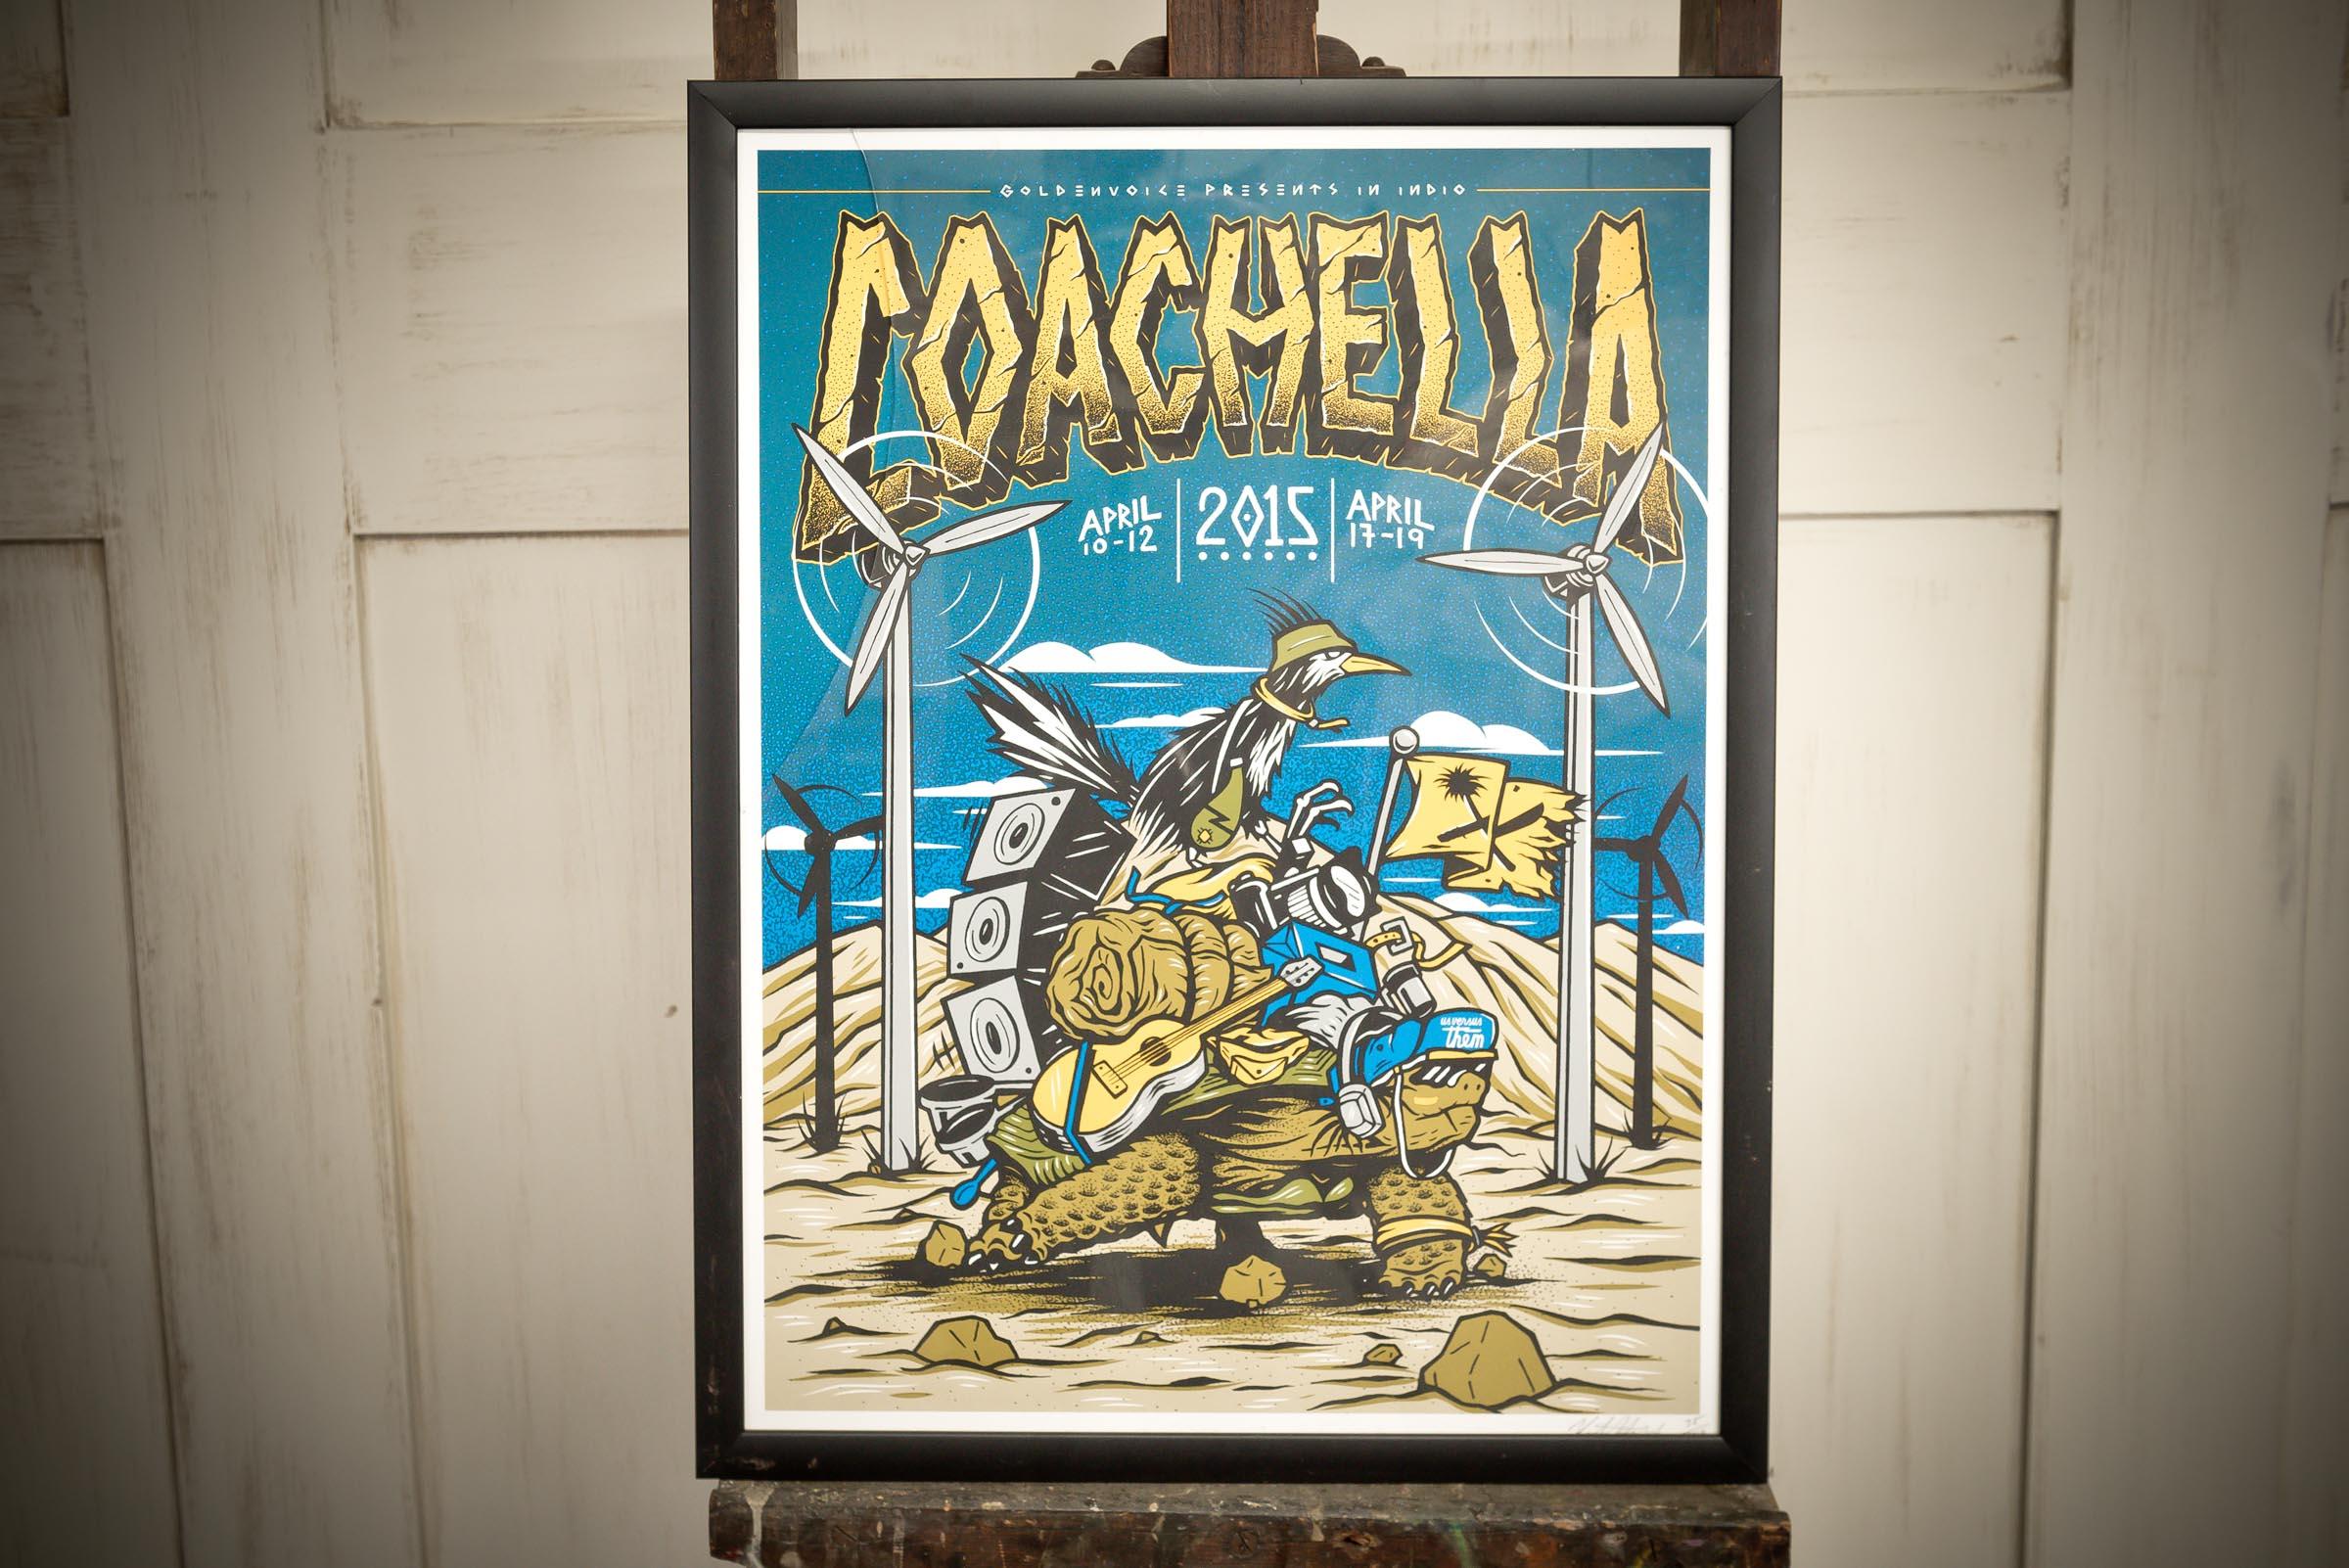 coachella 2015 poster